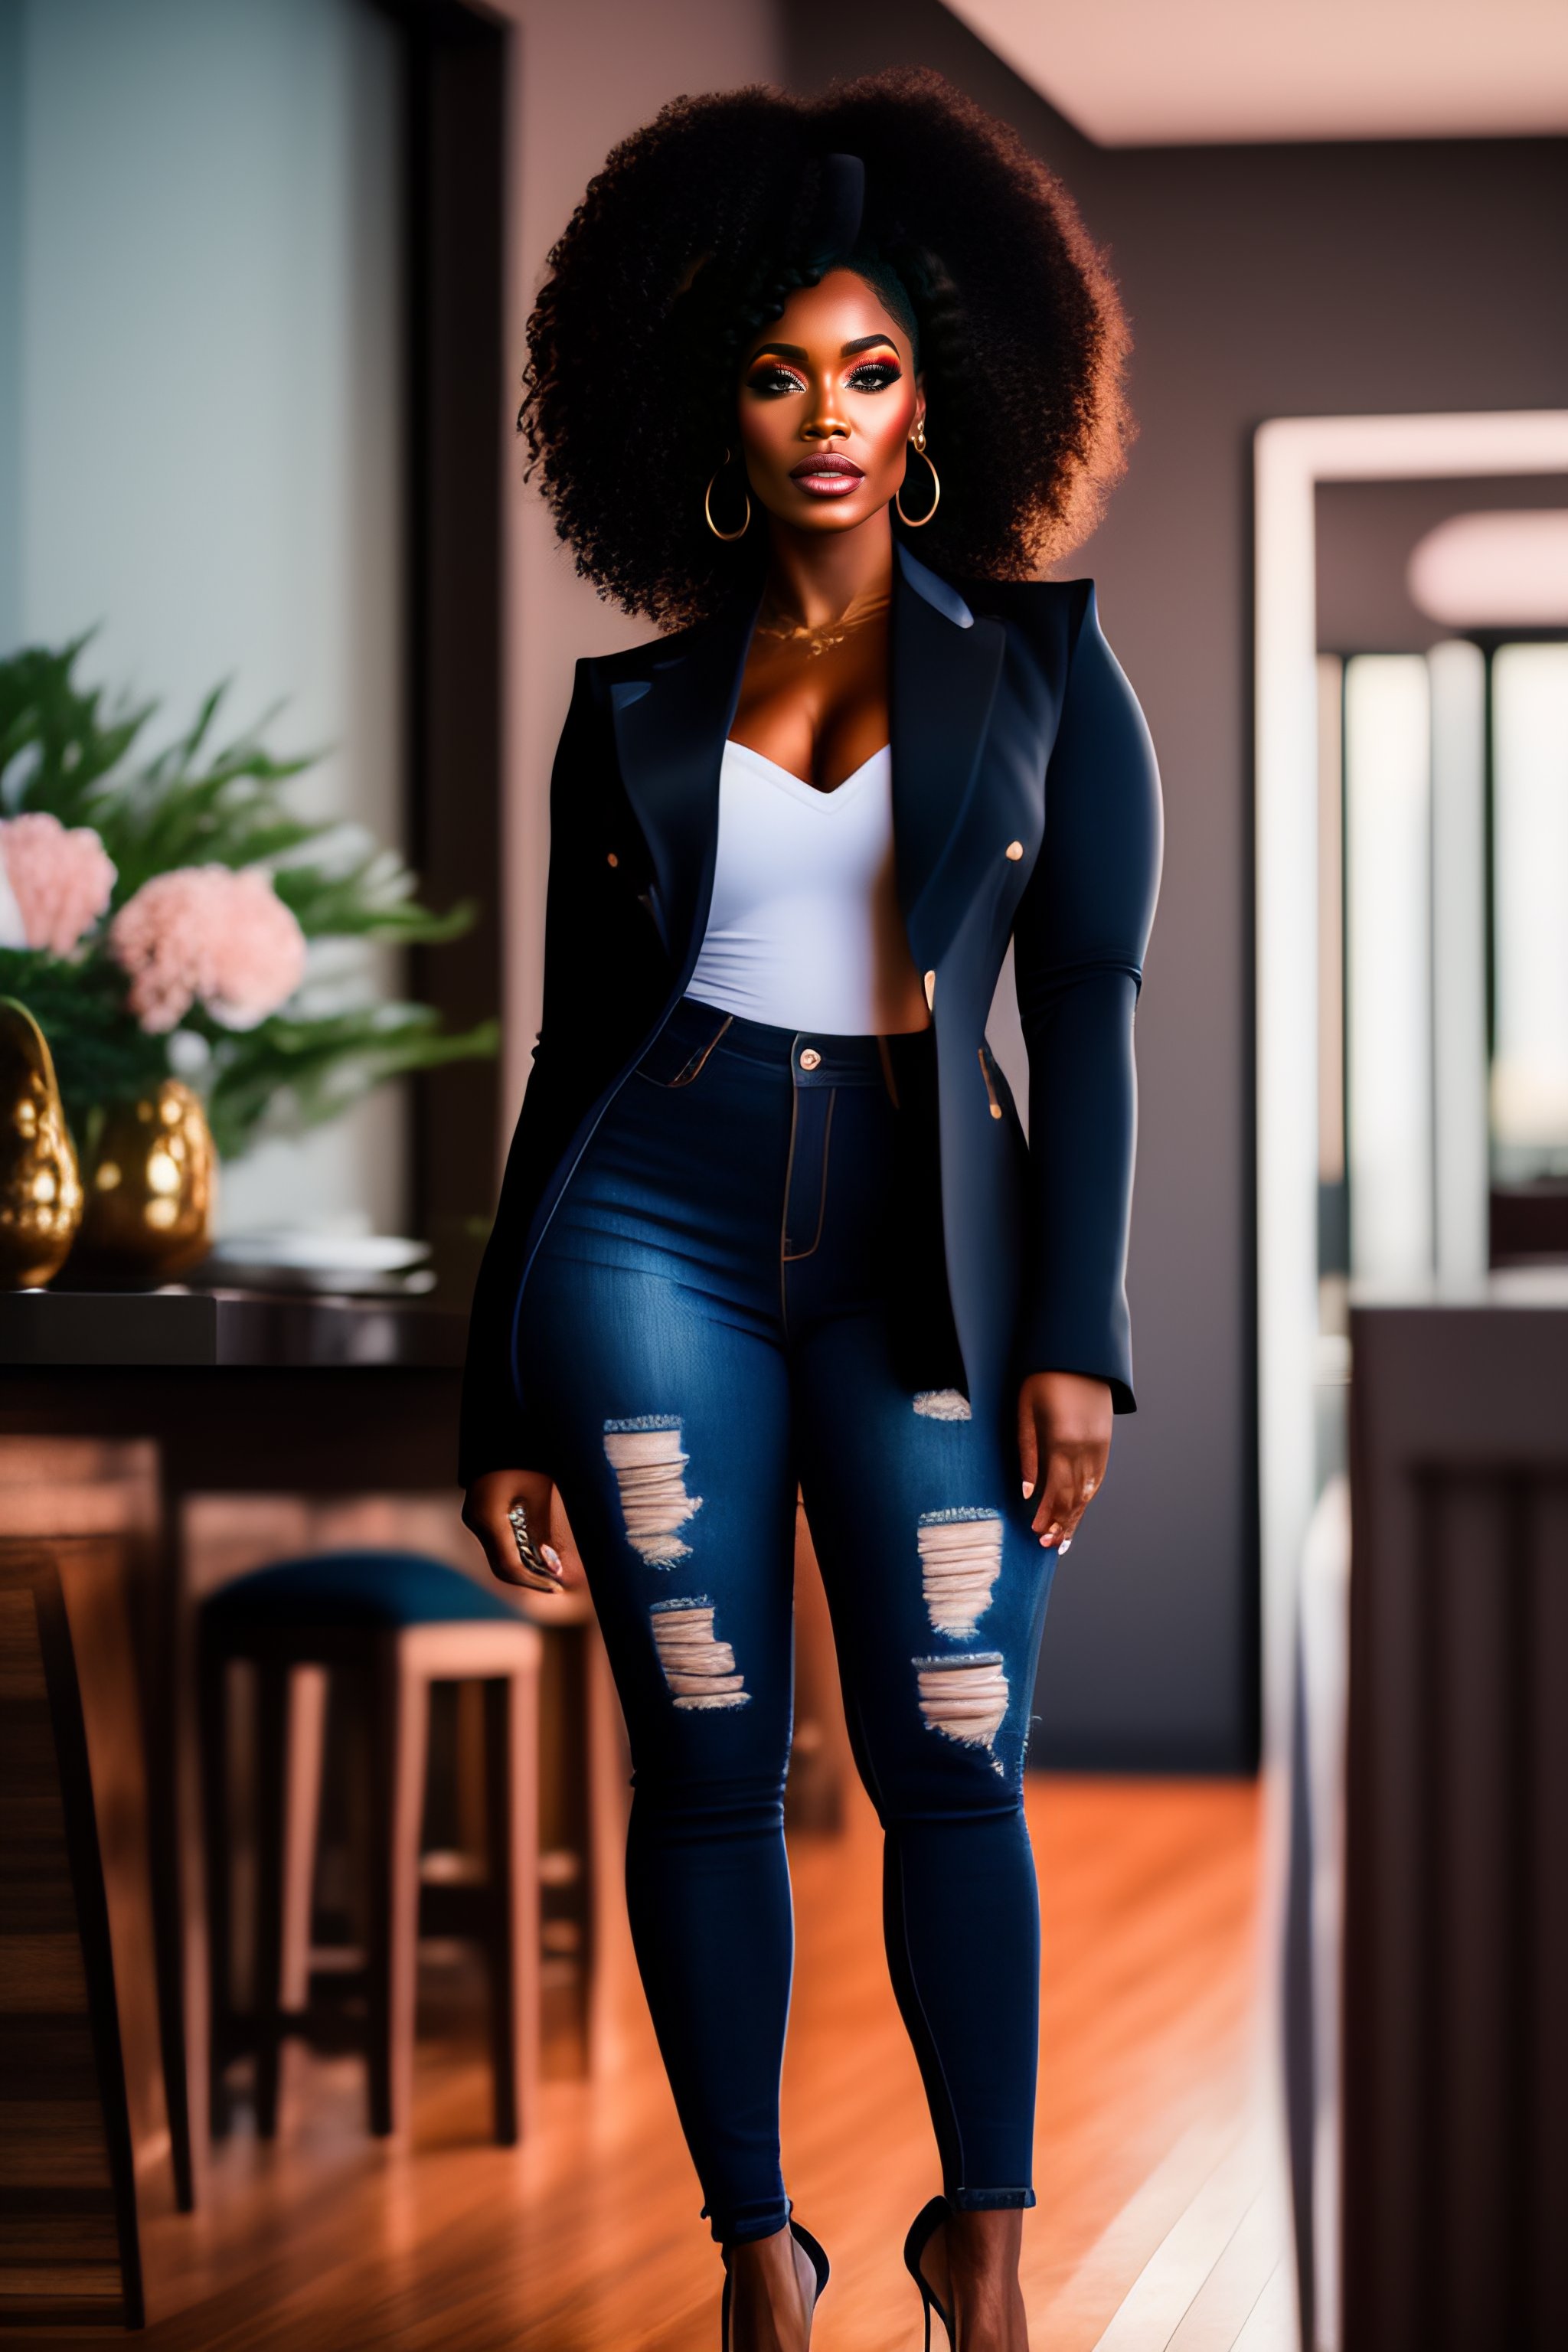 Lexica - Pretty black woman wearing a fashion nova, needing